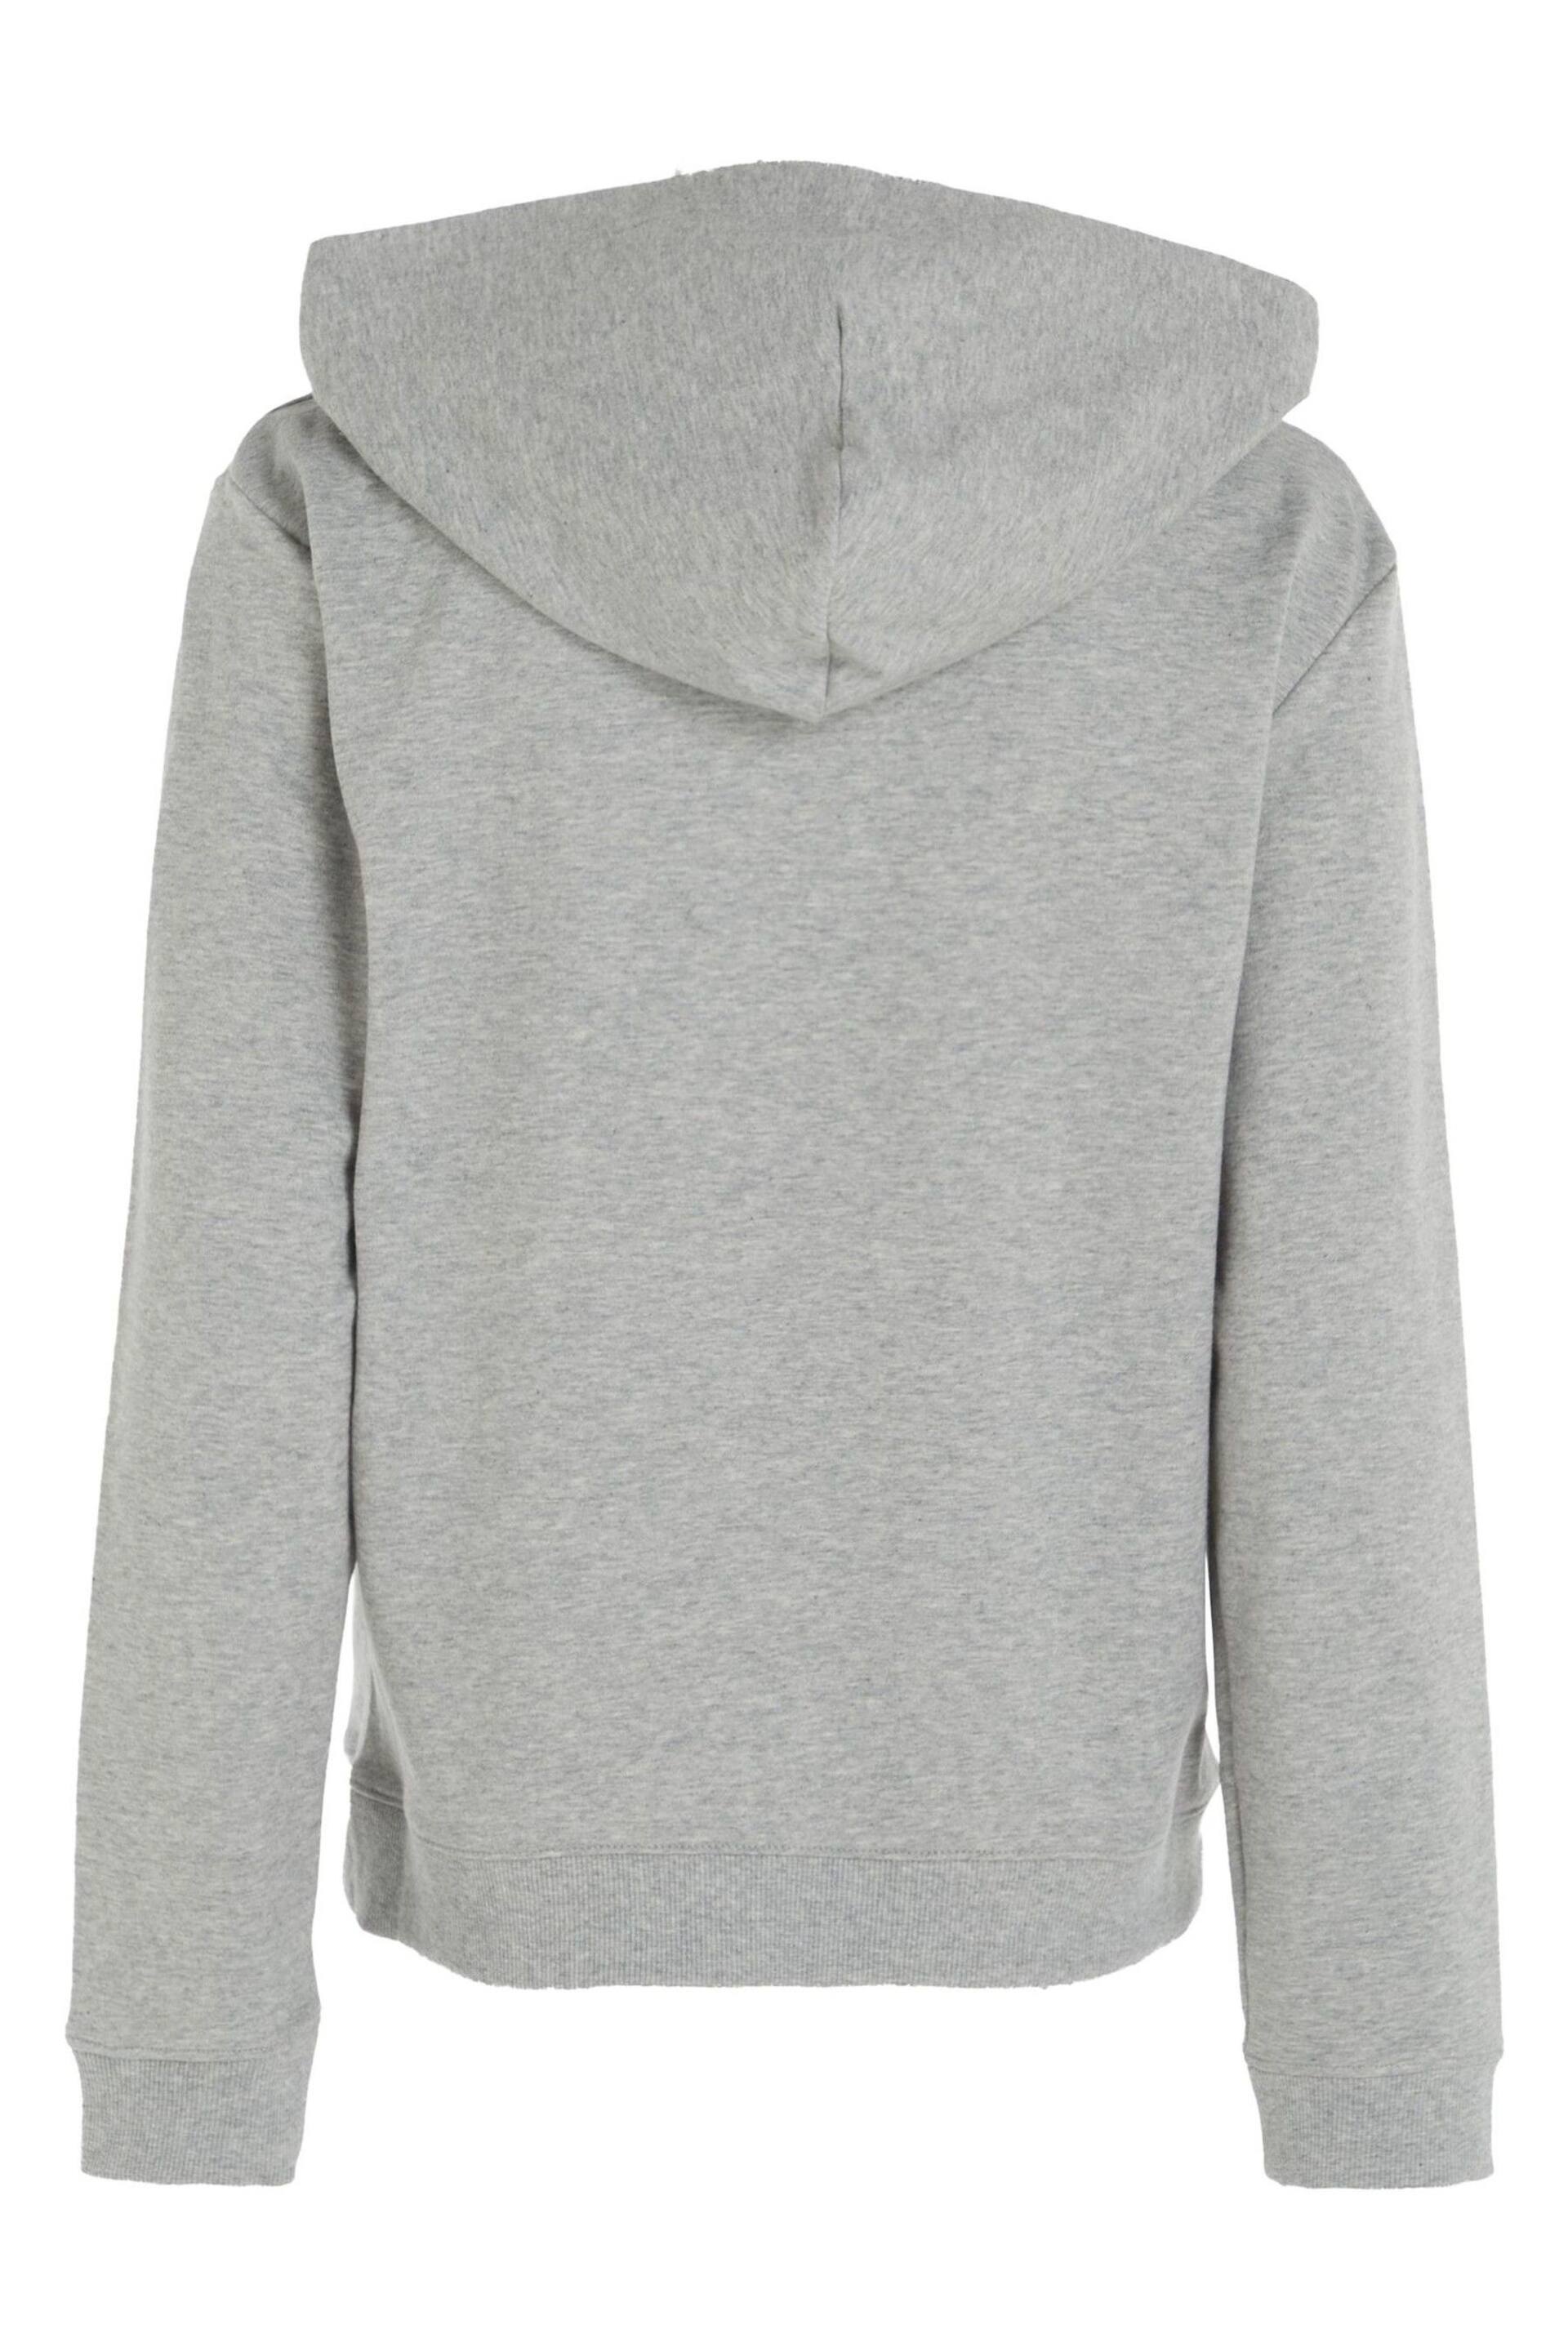 Calvin Klein Grey Modern Cotton Loungewear Full Zip Hoodie - Image 5 of 6